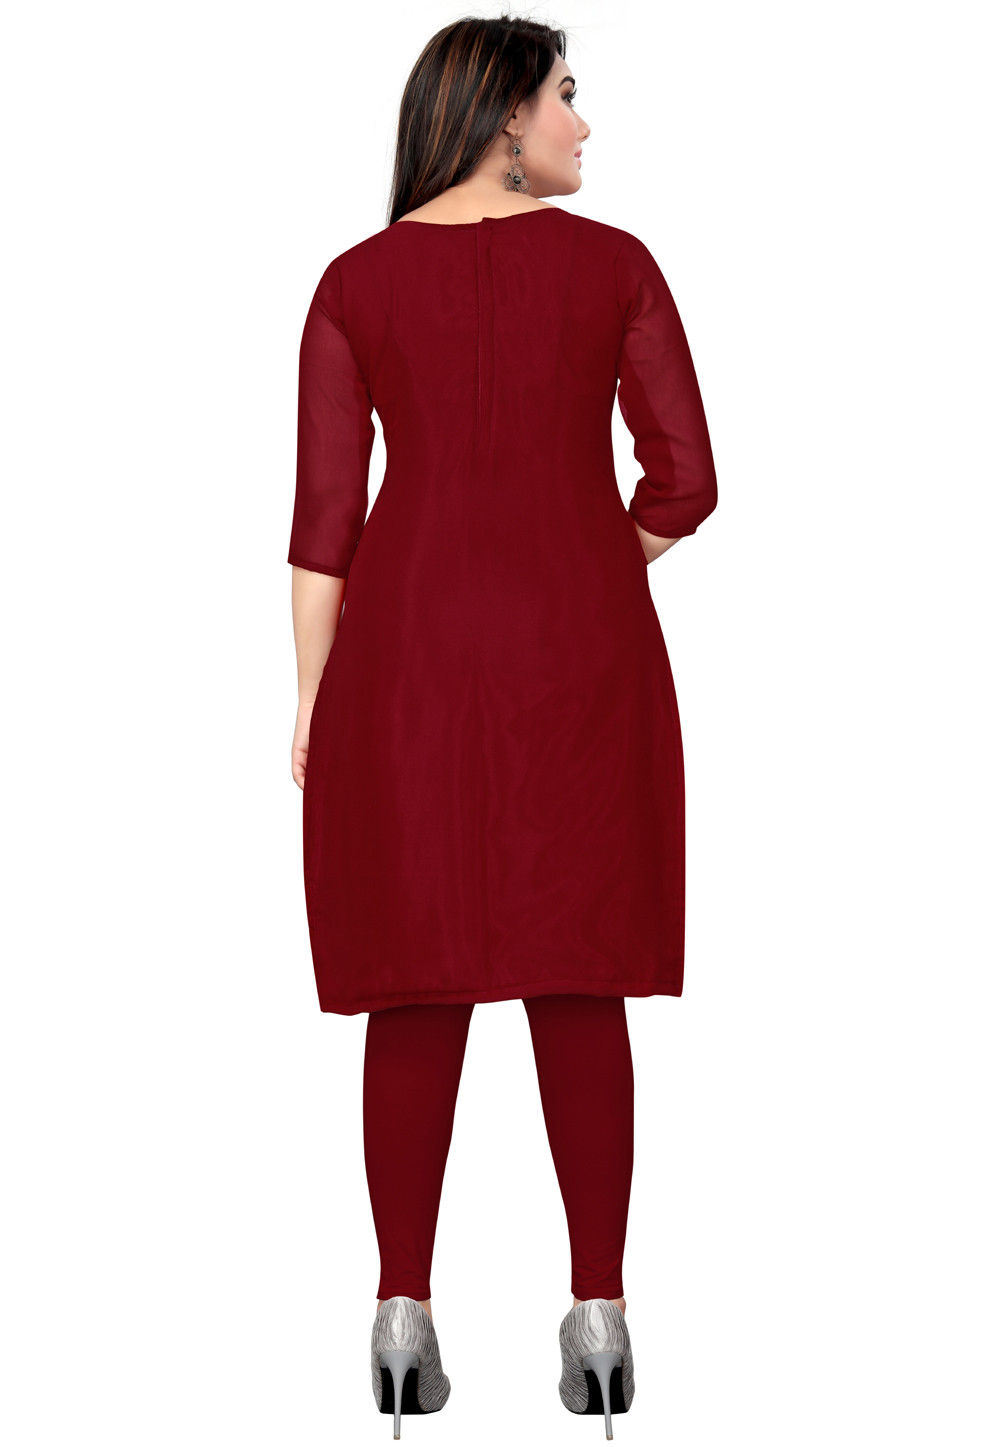 Buy Embroidered Georgette Straight Suit in Maroon Online : KYE1825 ...